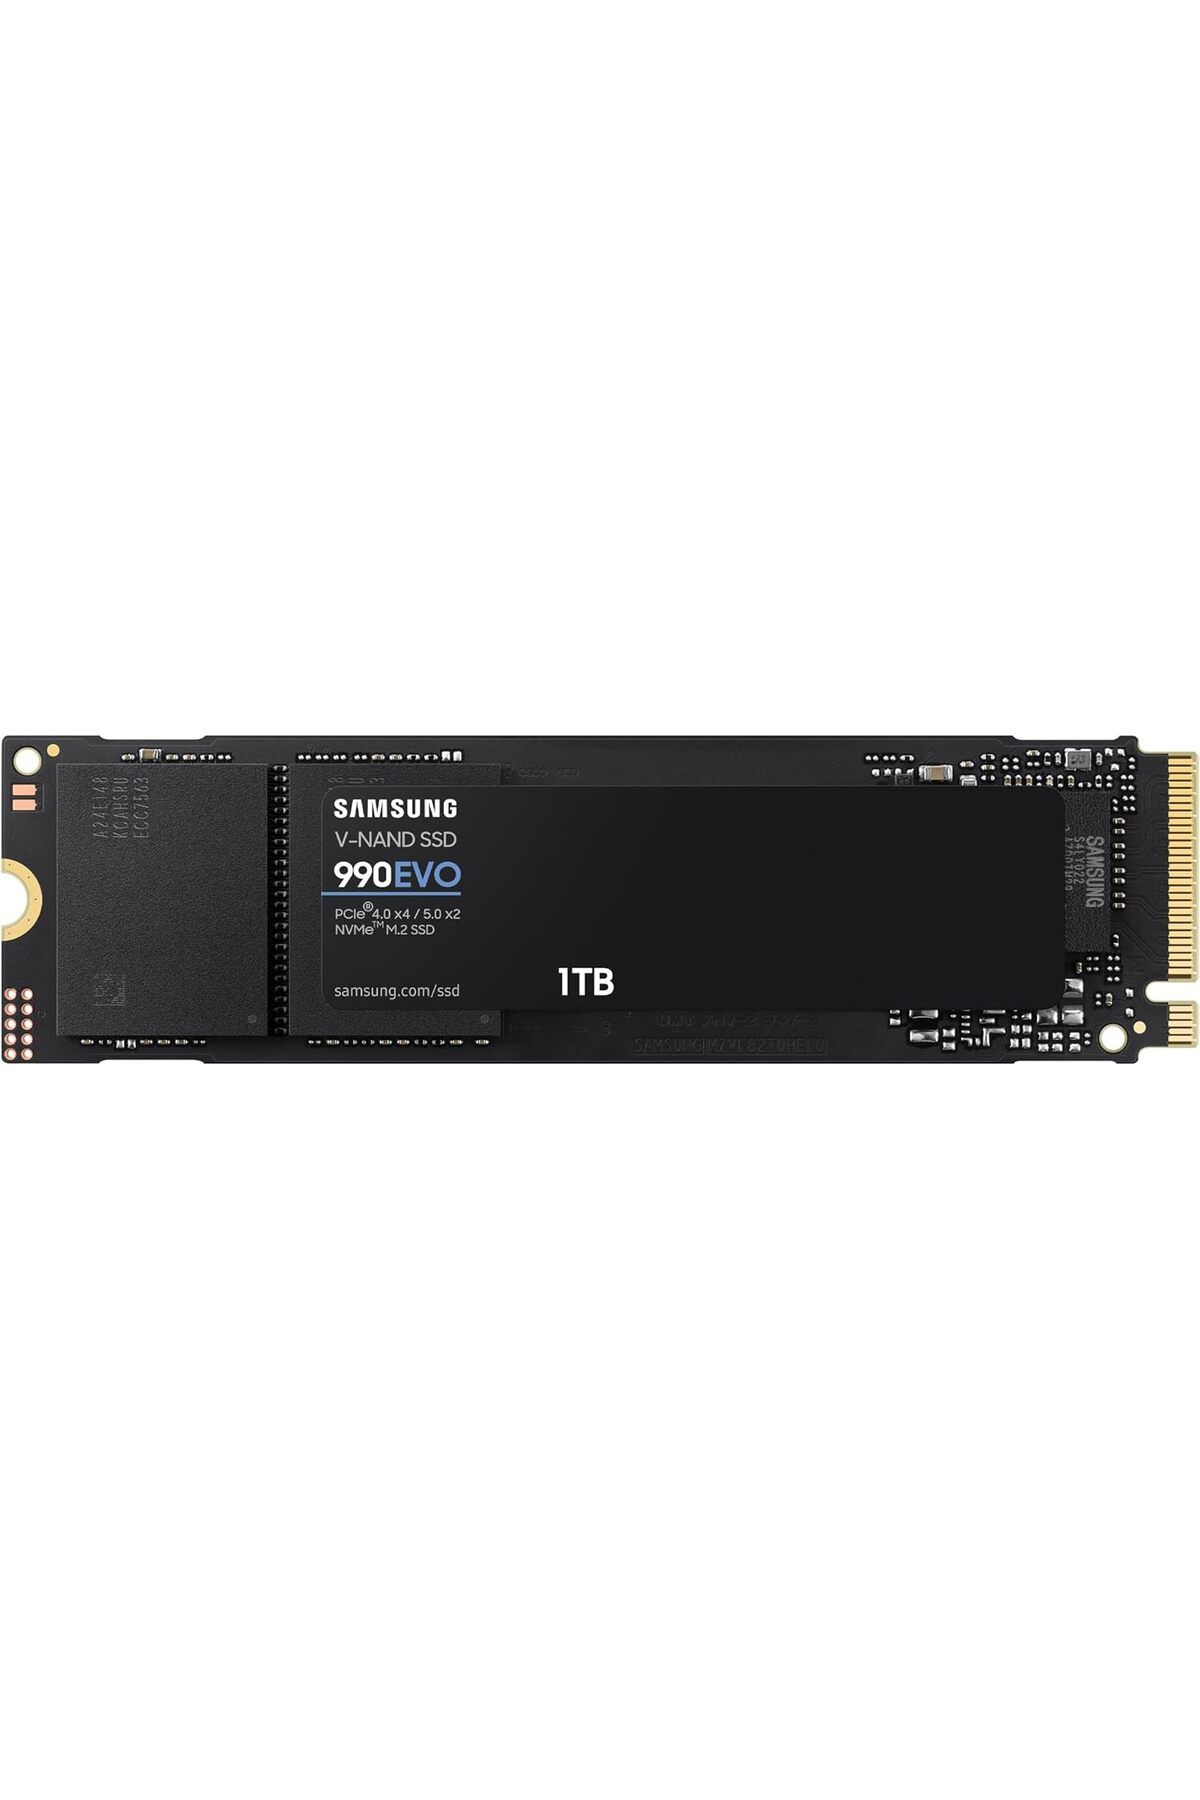 starnewstore 990 EVO1TB 5,000 MB/s, PCIe 4.0 x4/ 5.0 x2 NVMe M.2 (2280) SSD (MZ-V9E1T0BW)